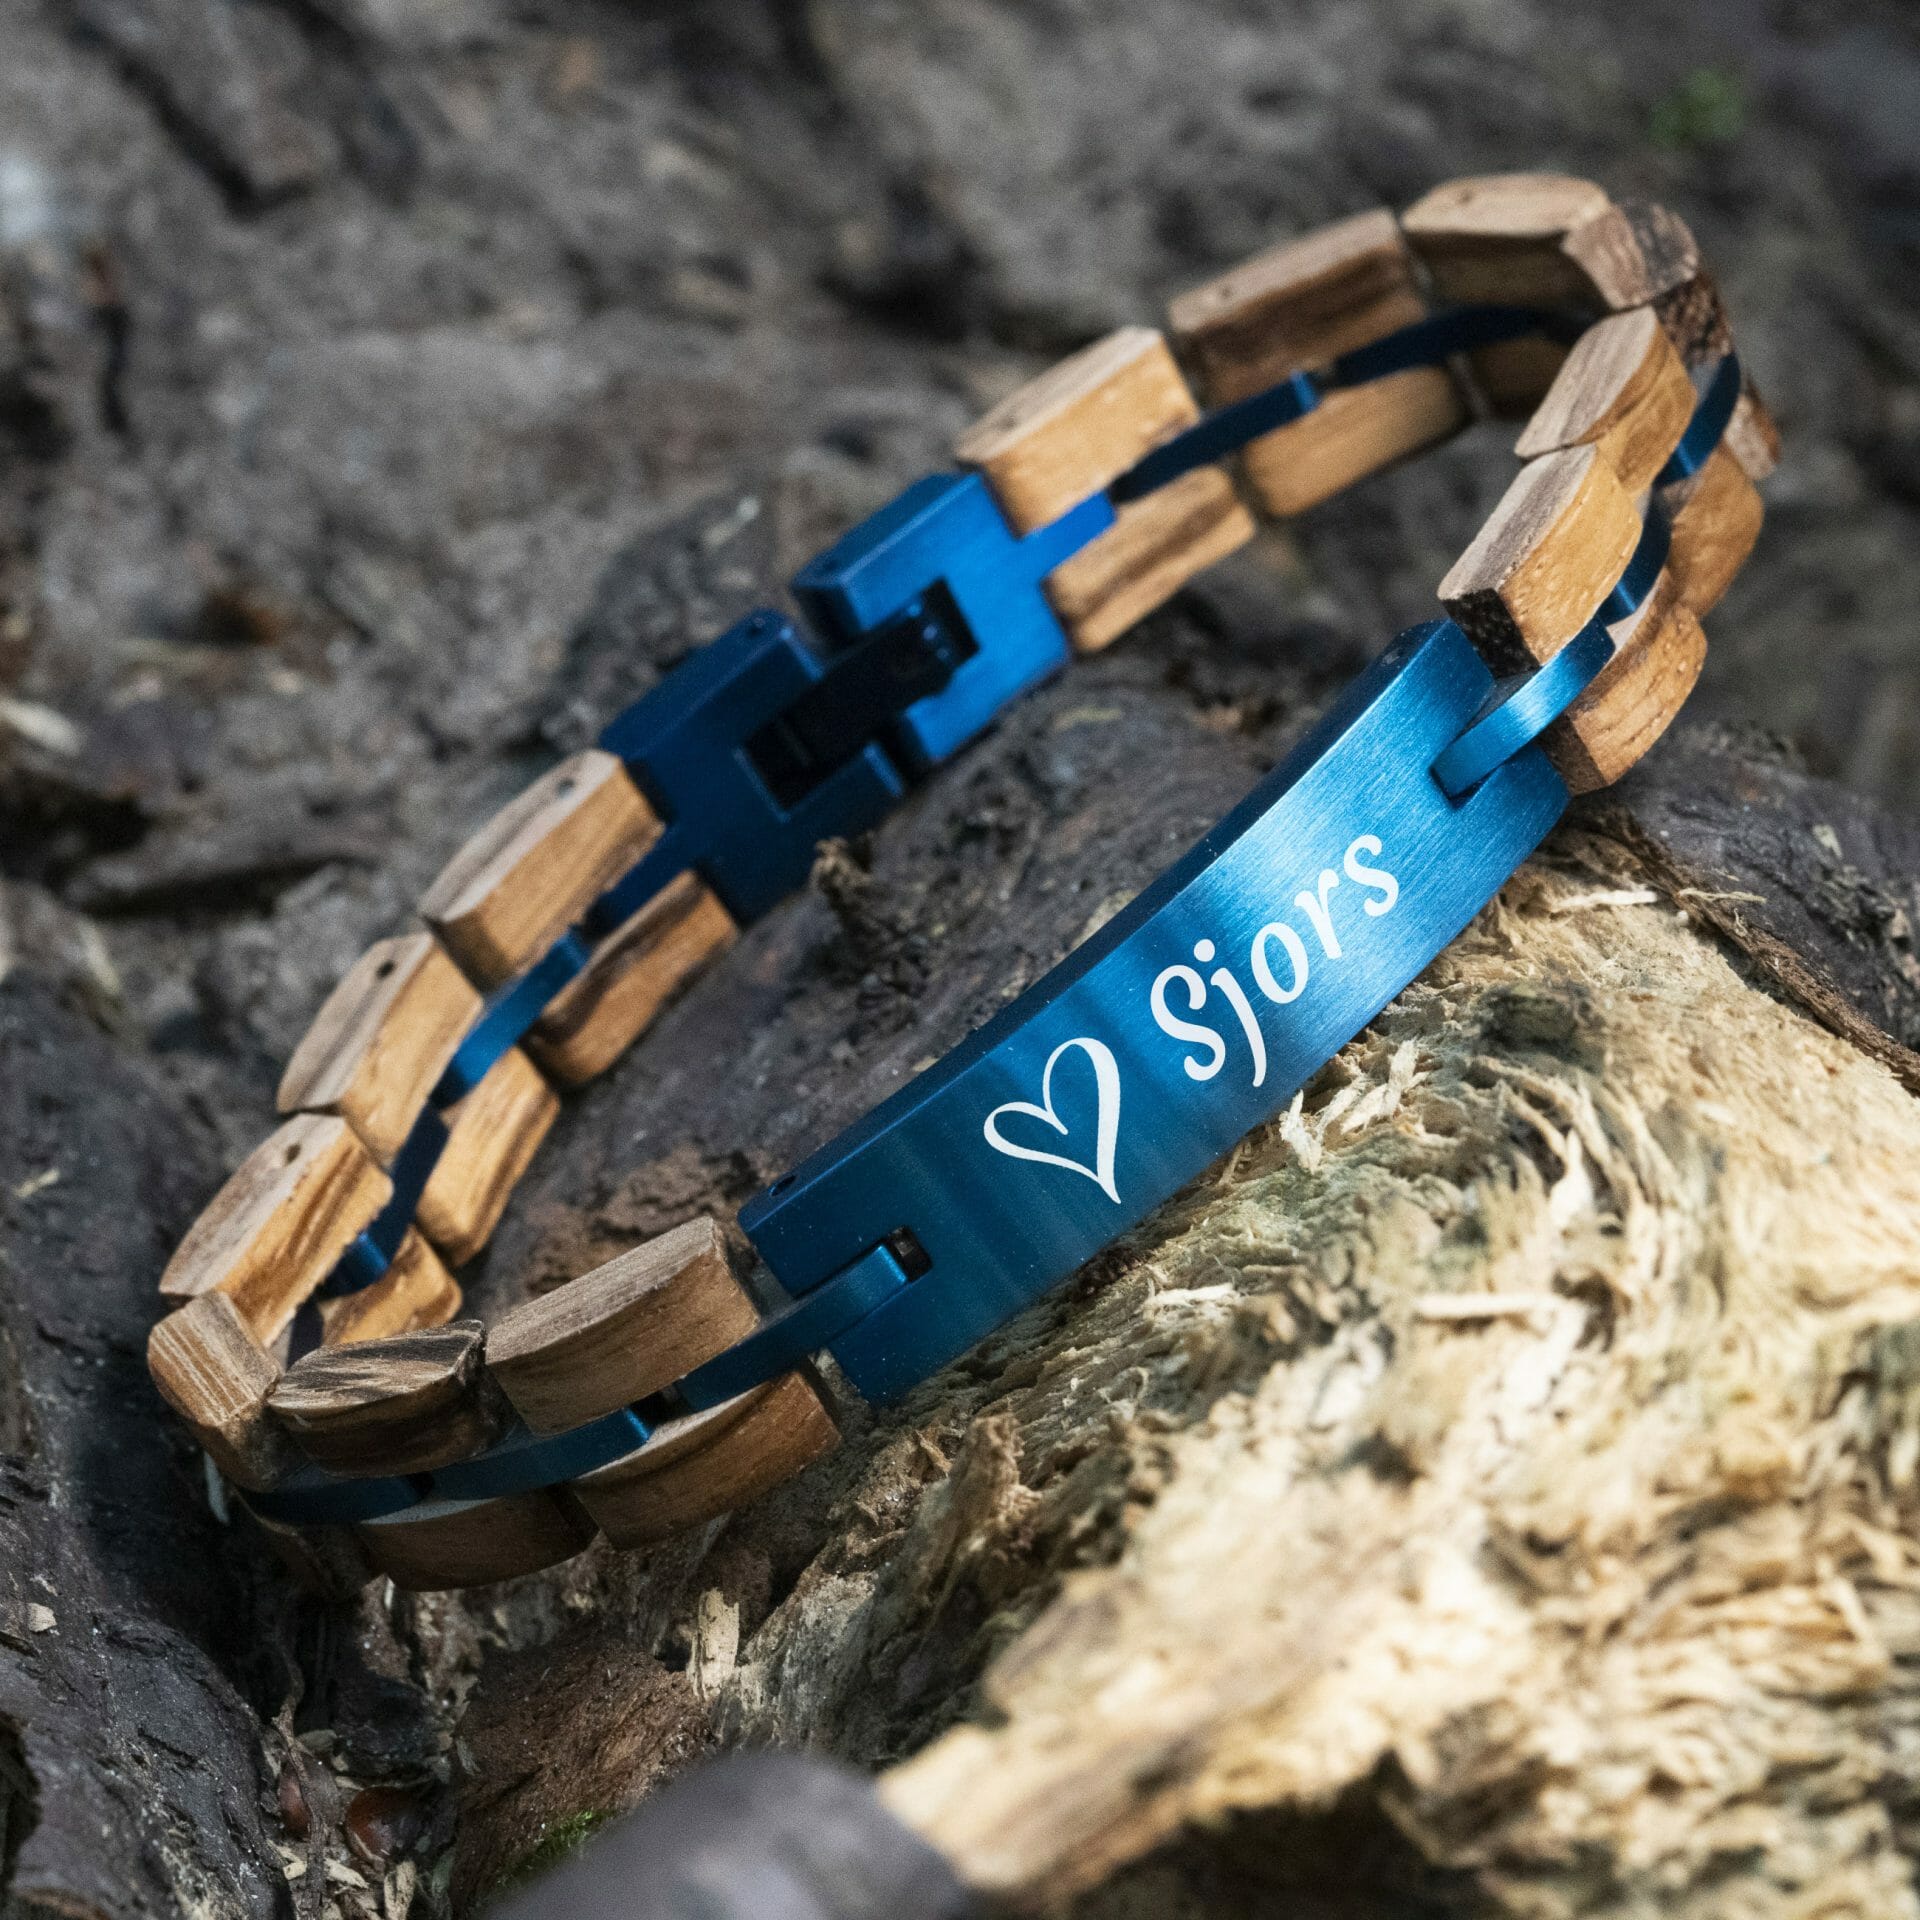 Own name engraving on blue TimberWood Wooden bracelet